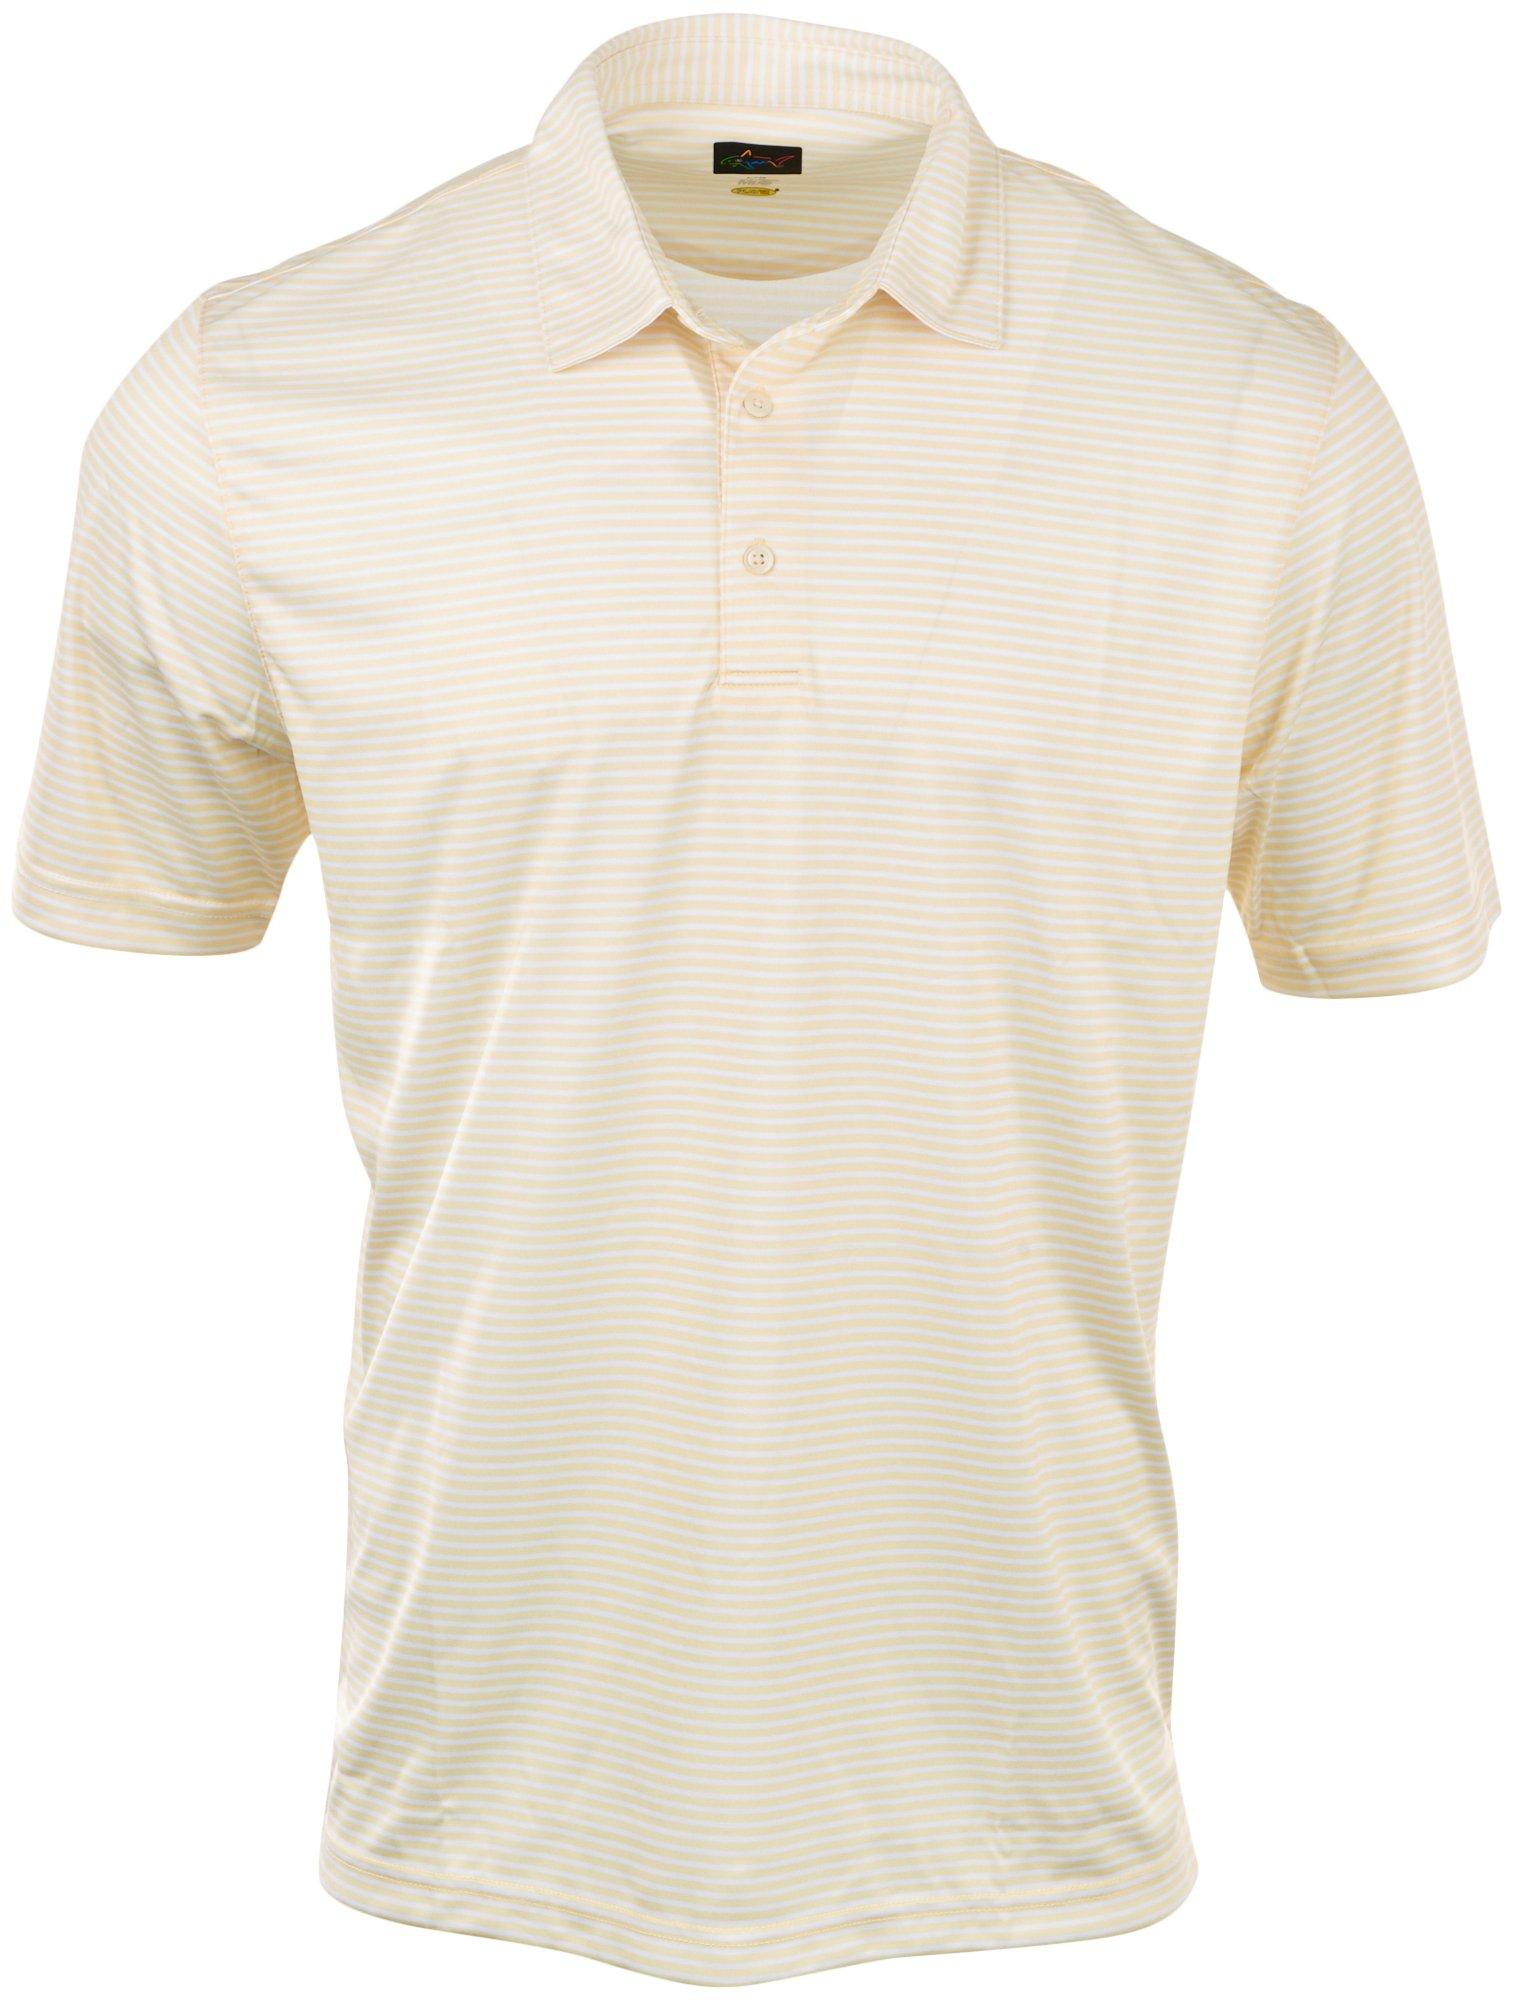 Greg Norman Mens Prestige Stripe Short Sleeve Polo Shirt